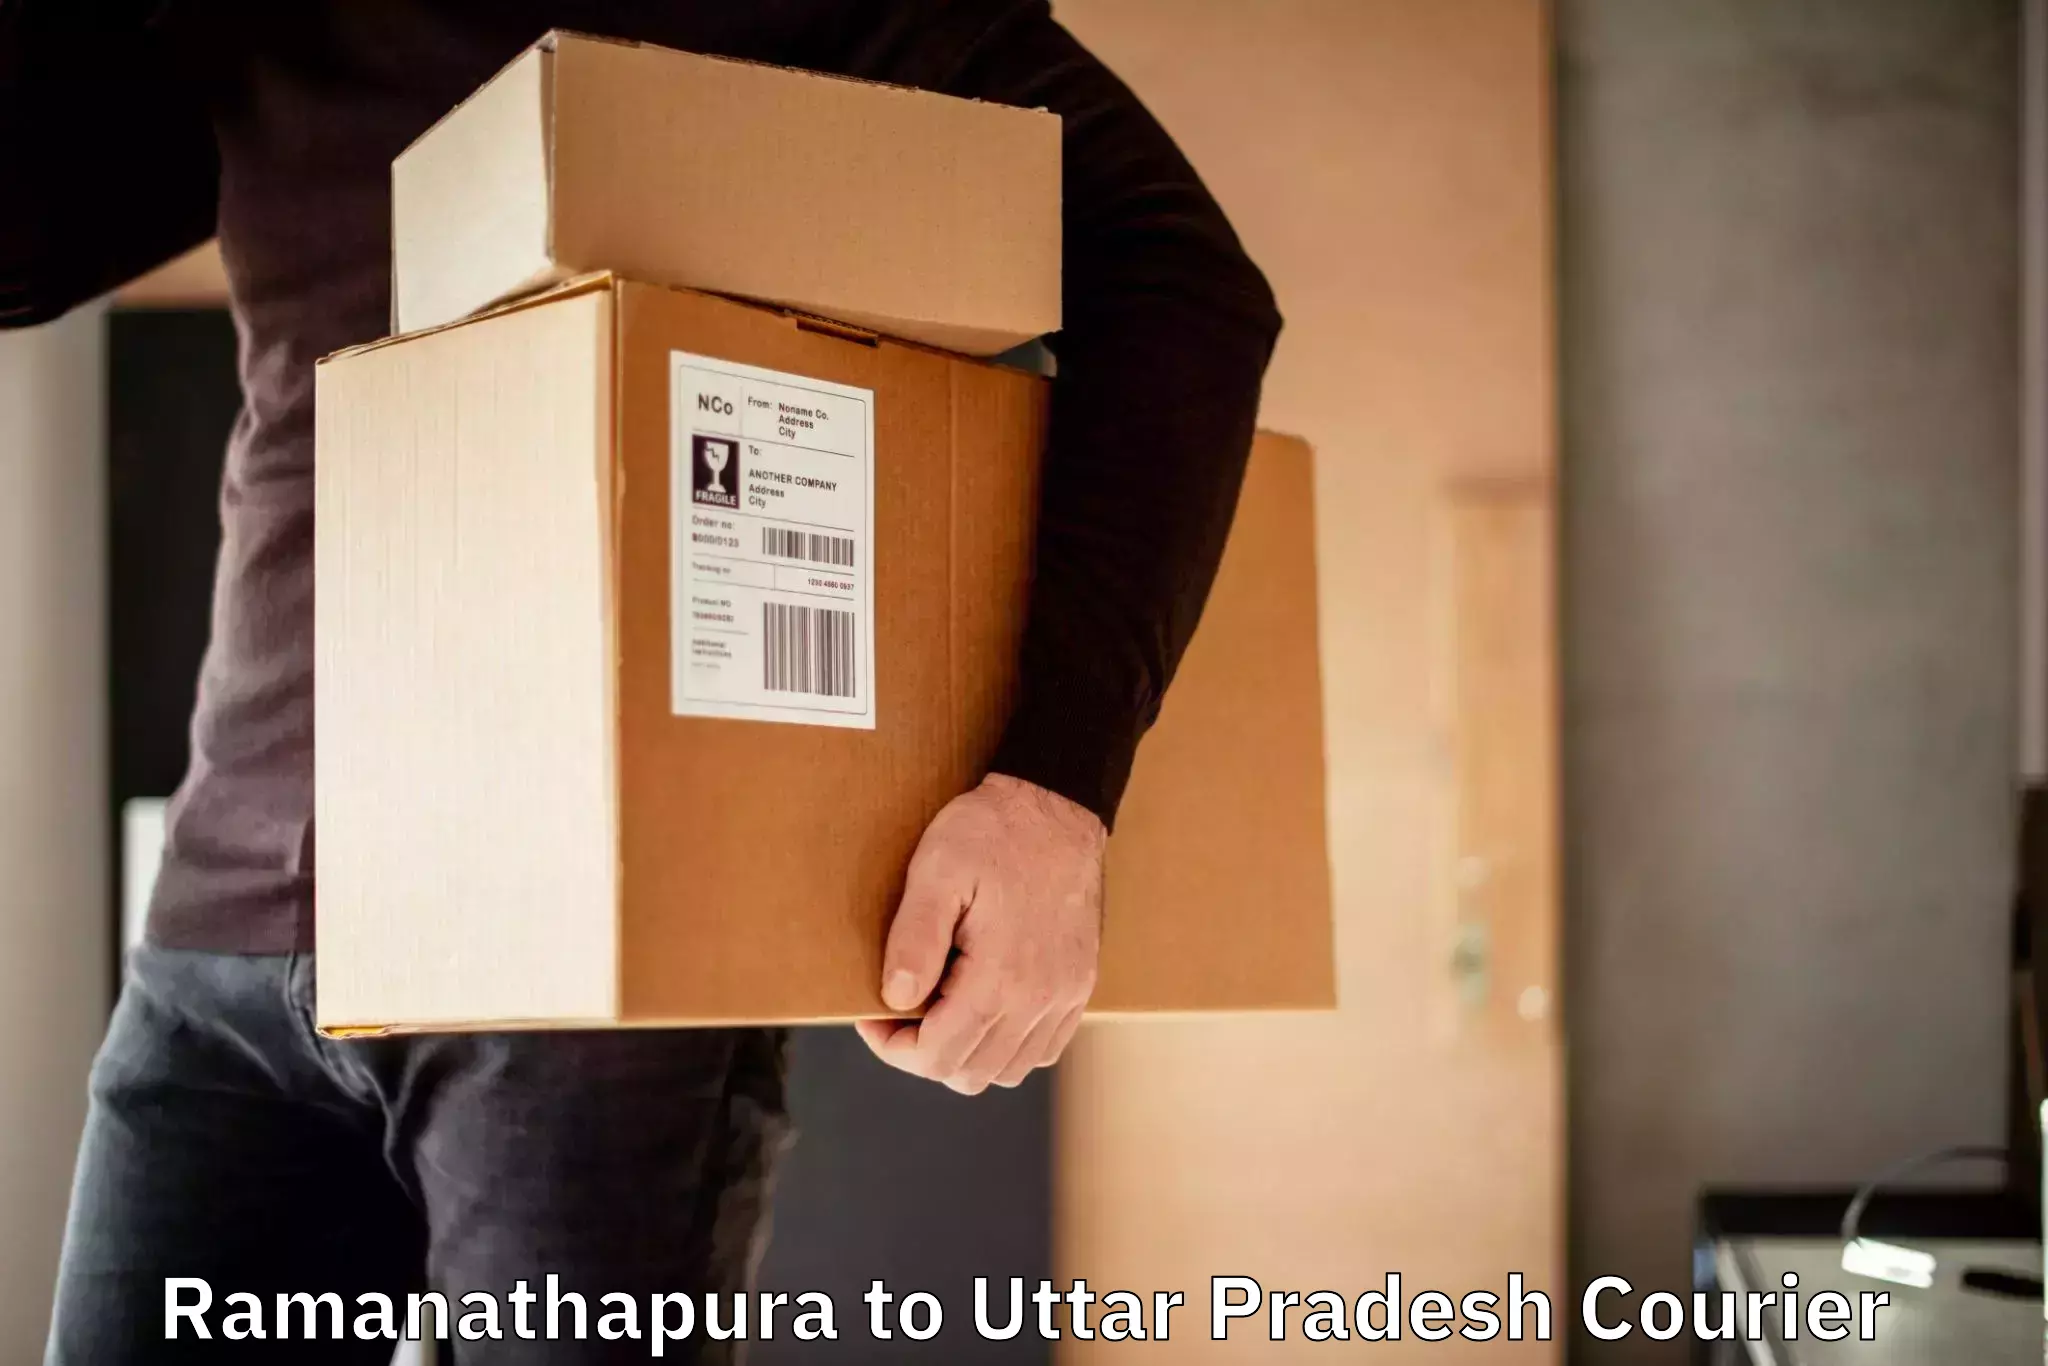 Courier service partnerships Ramanathapura to Noida